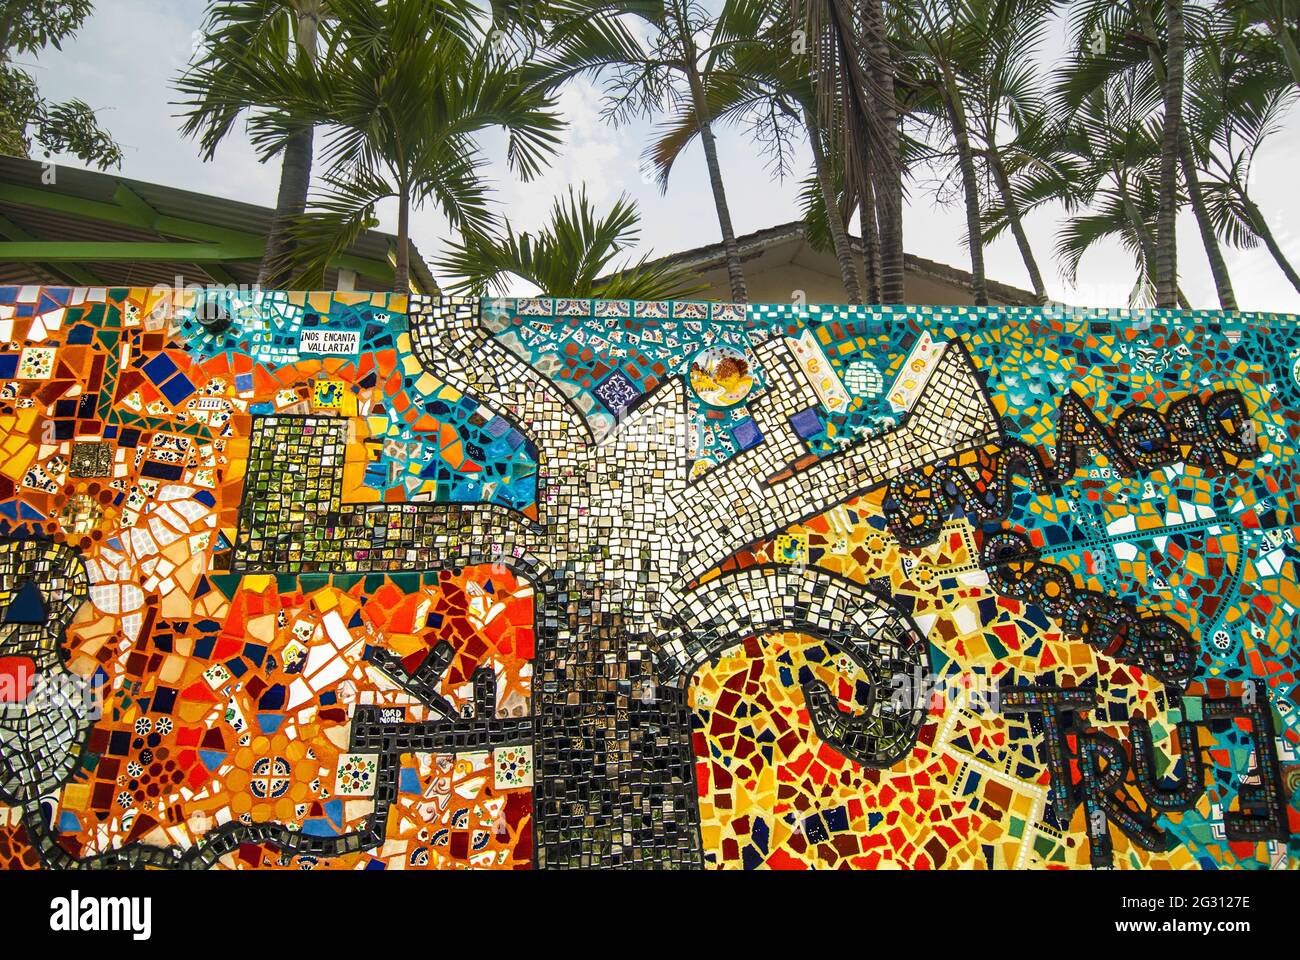 Mozayko Vallarta is a mosaic wall project commemorating the 44th anniversary of the city of Puerto Vallarta, created by local artist Natasha Moraga. Stock Photo